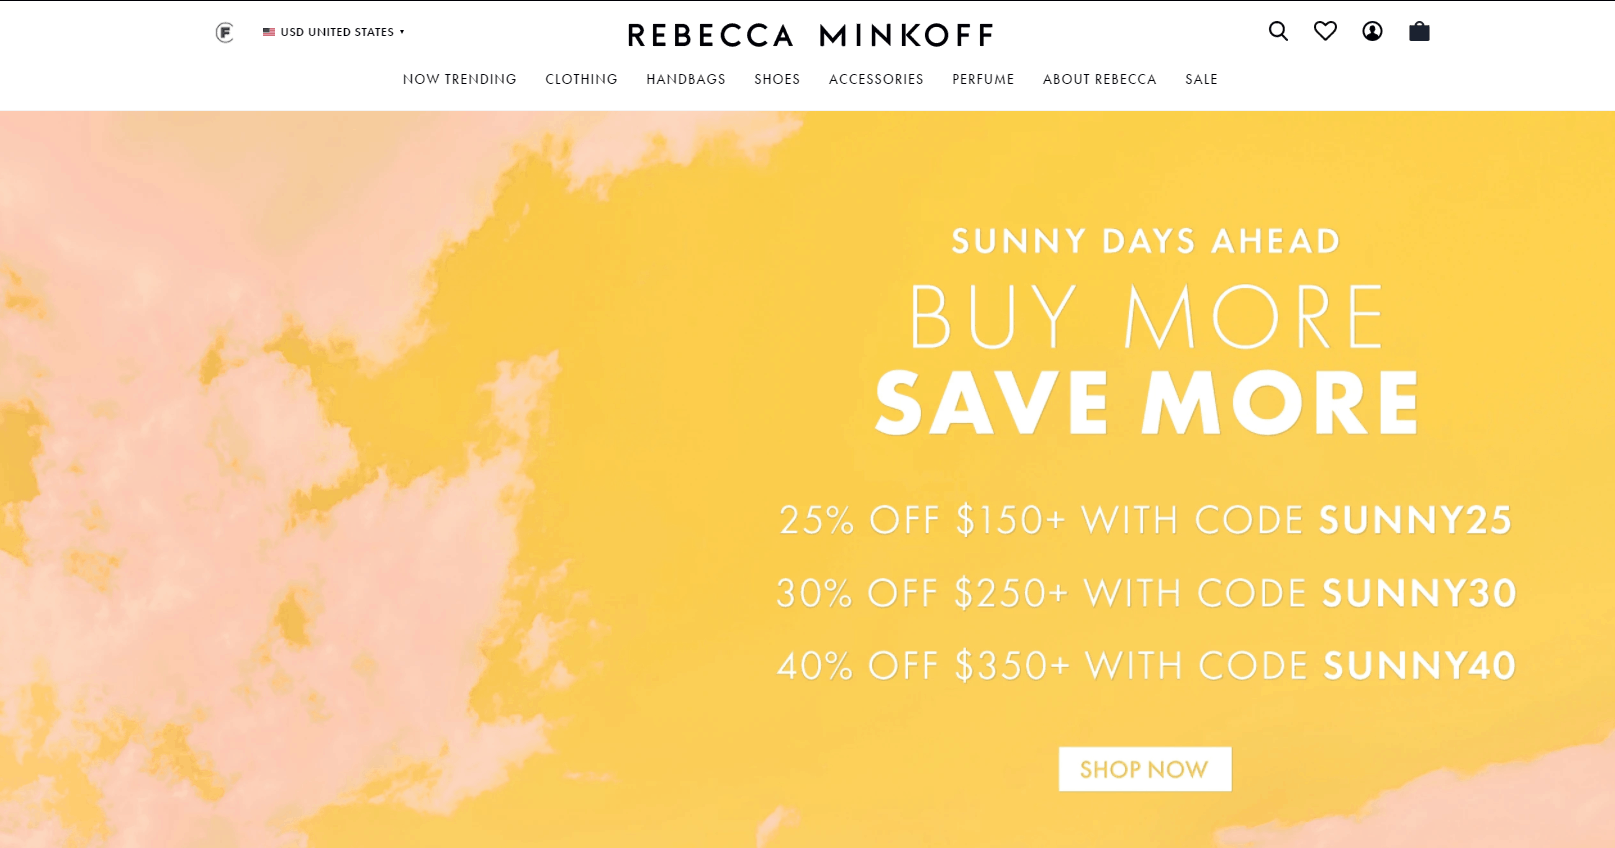 Rebecca Minkoff優惠代碼2022-rebeccaminkoff美國官網全場時尚服飾鞋包最高滿額6折促銷折扣區也參加